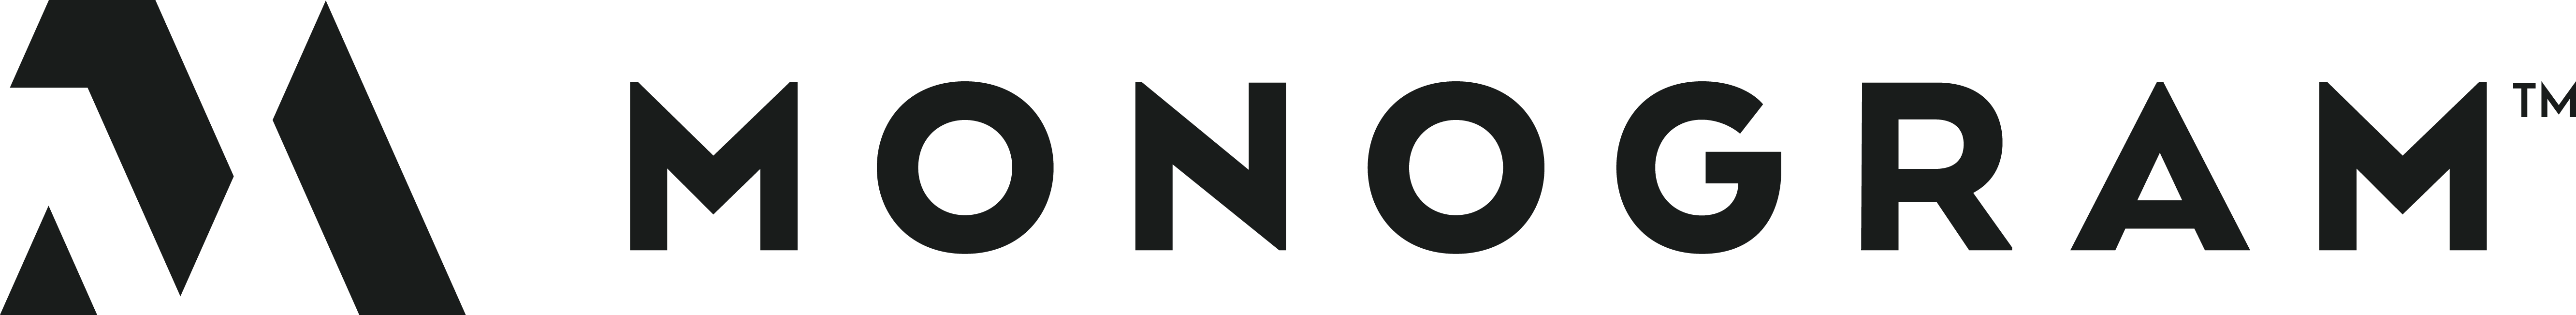 GM Monogram Logo